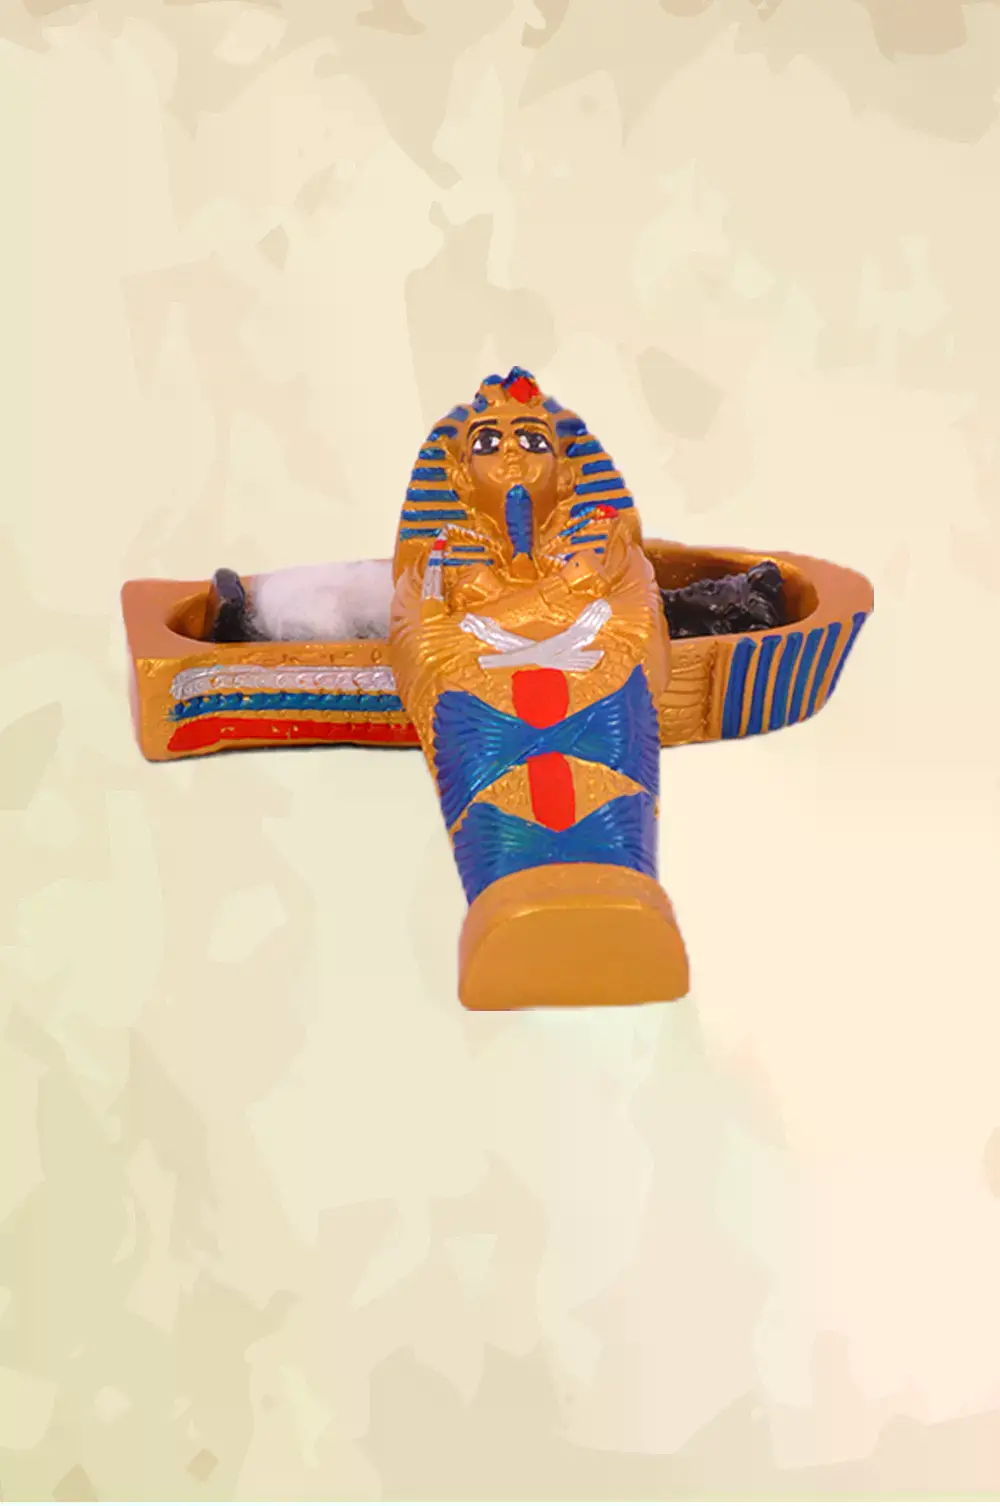 Mummy coffin representing abu Al haul